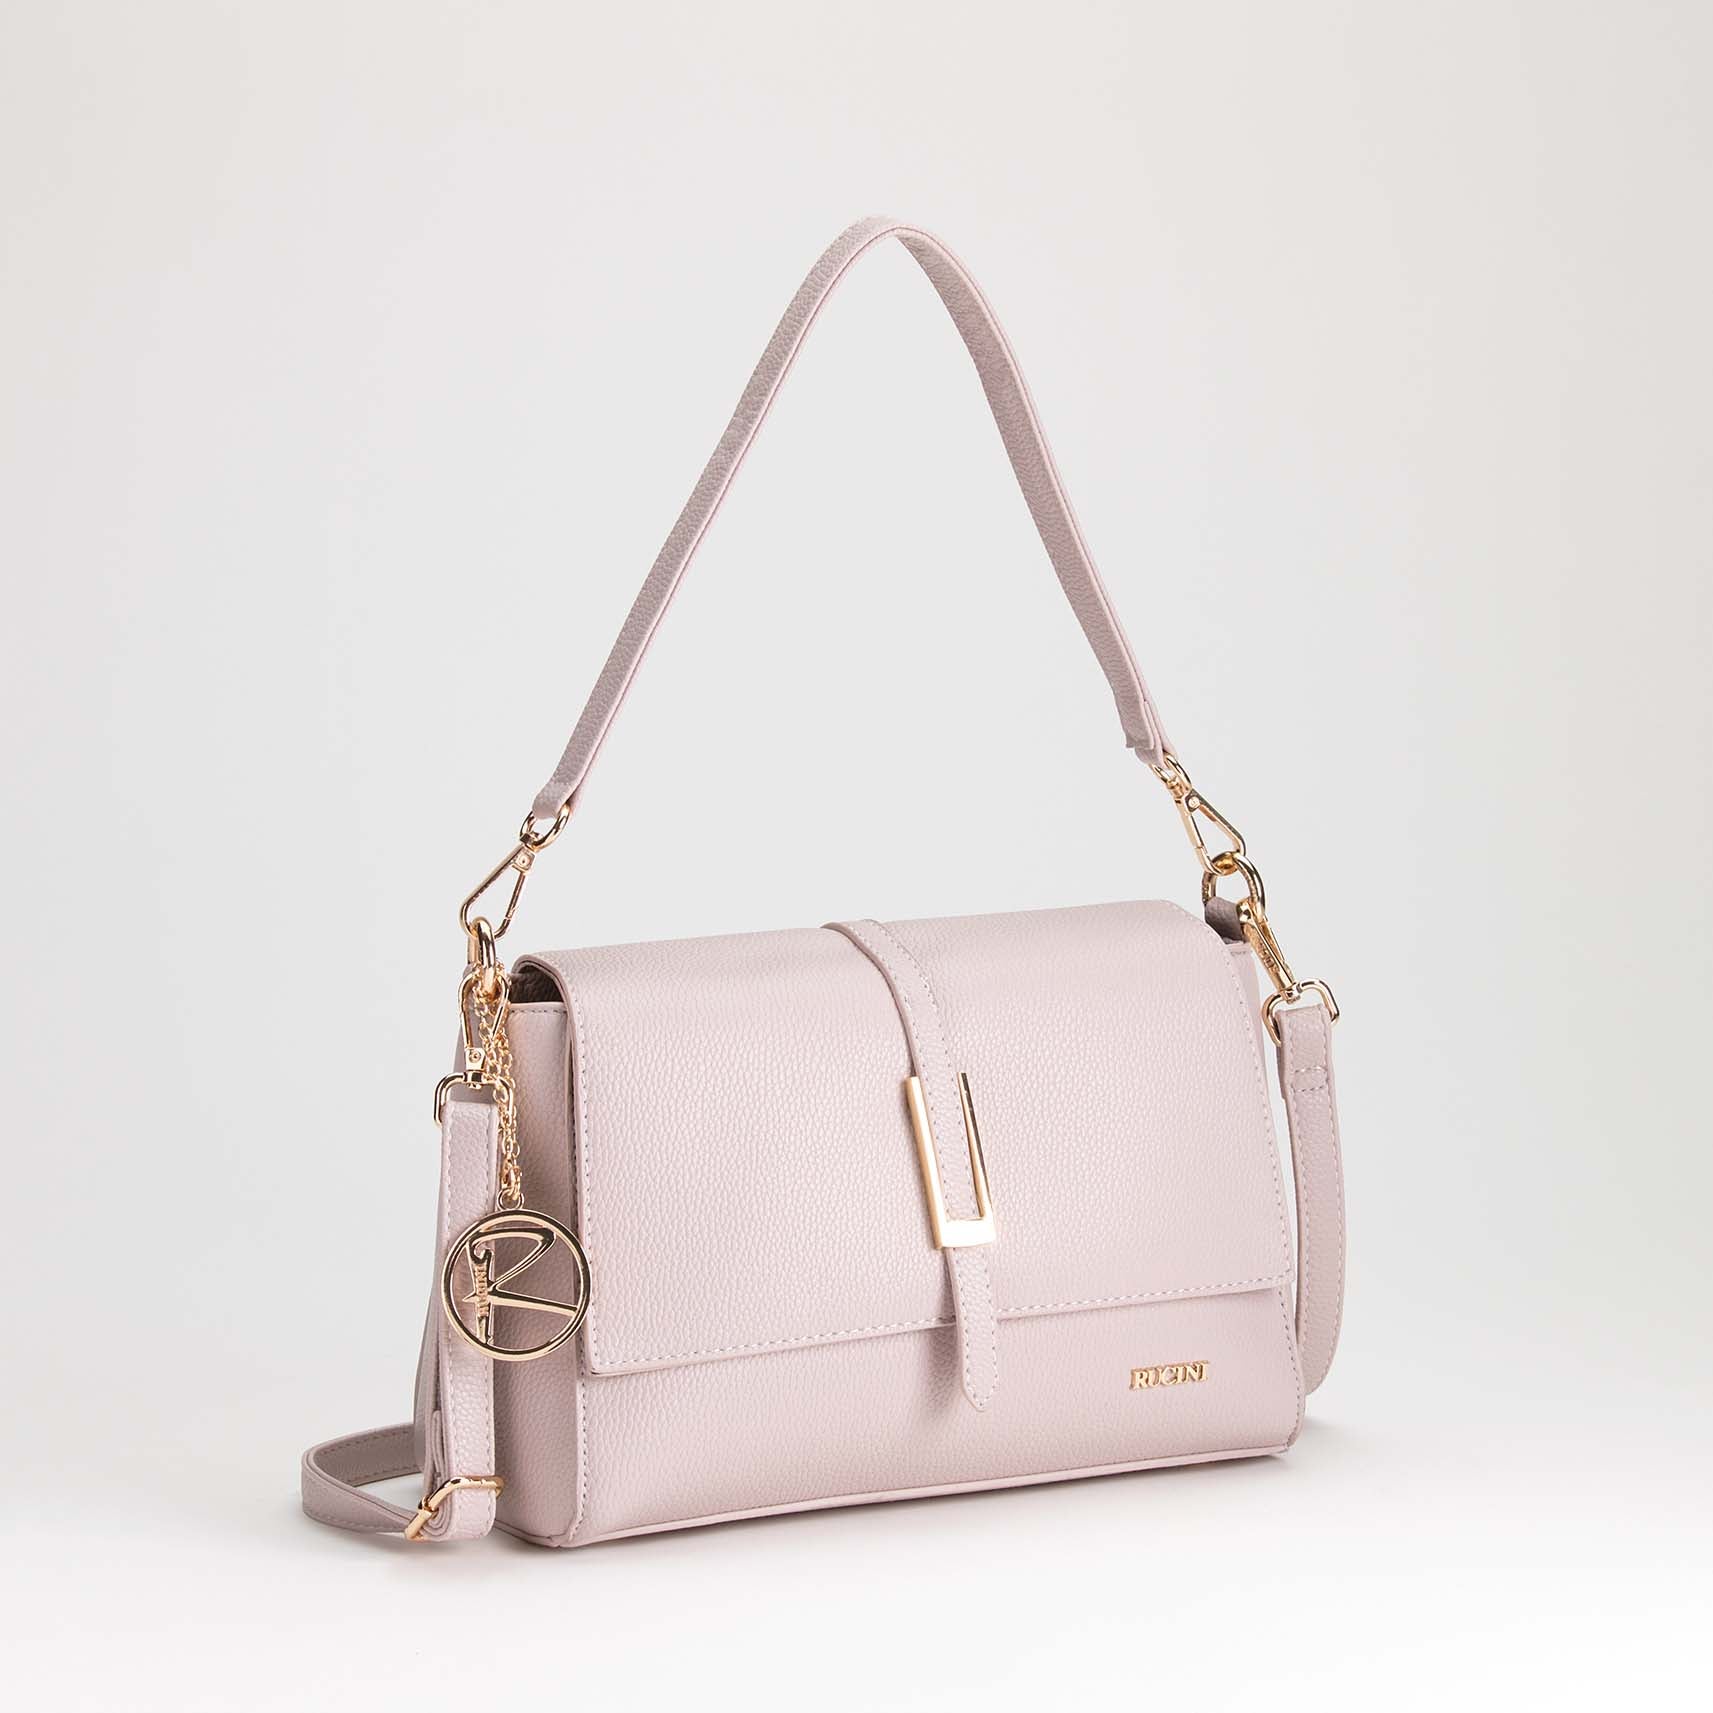 Josiny leather shoulder purse | Leather shoulder purse, Leather, Purses